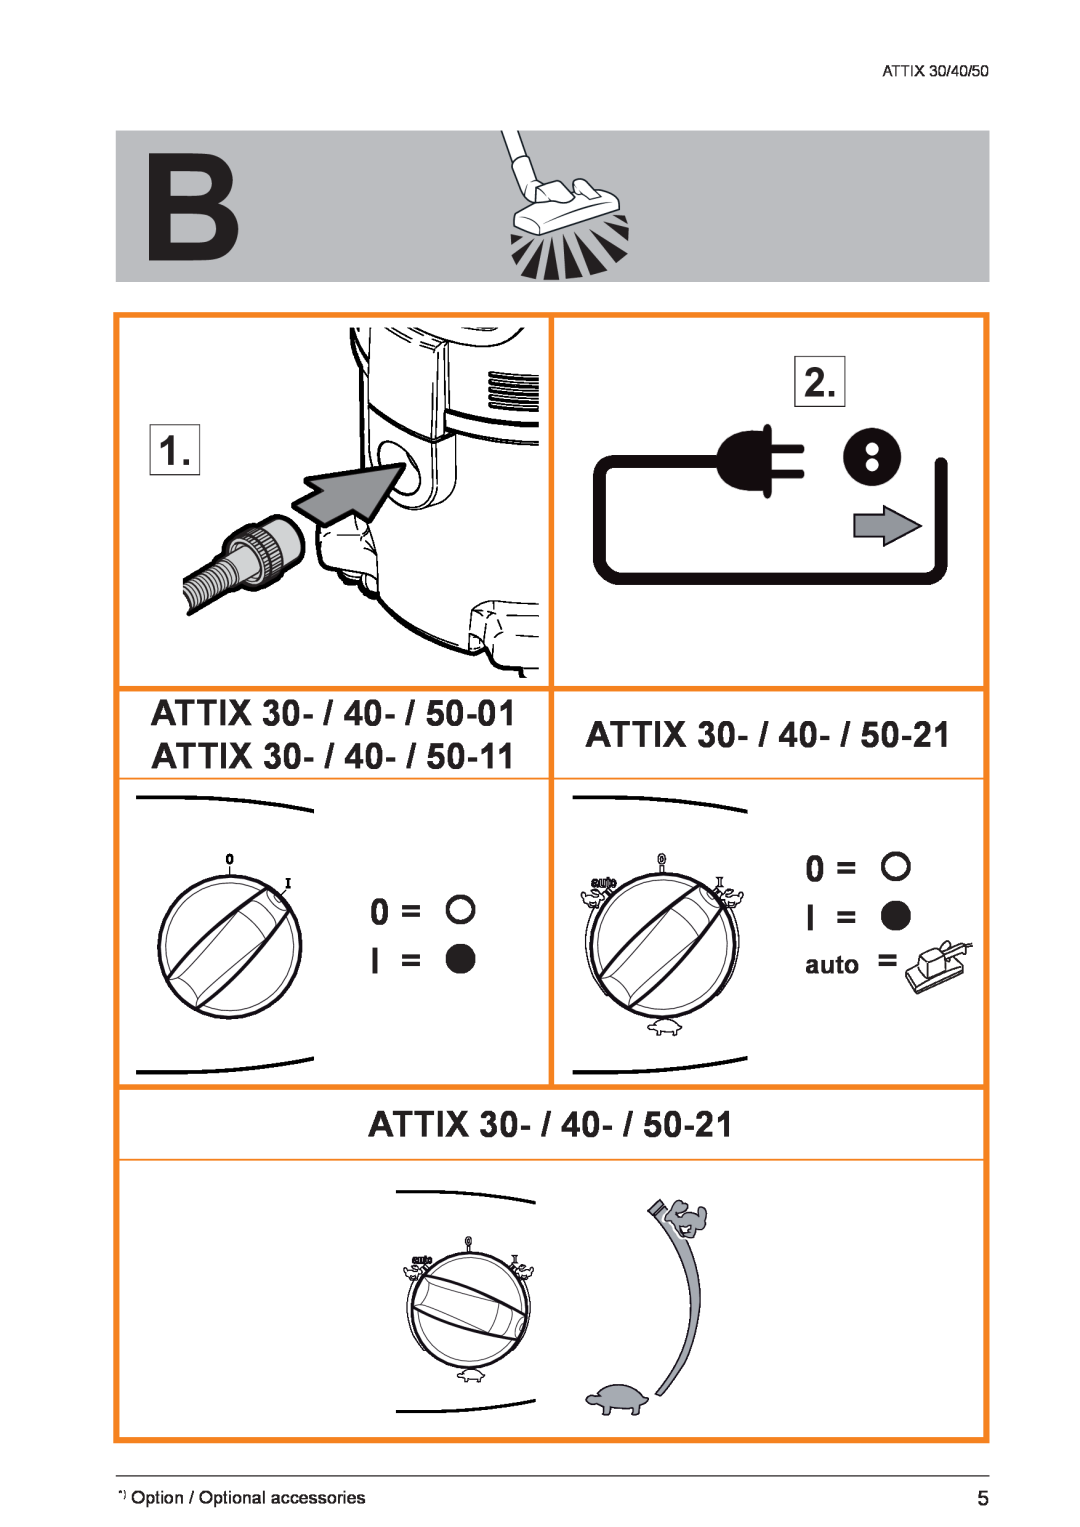 Nilfisk-ALTO 40/PC/XC, 50/PC/XC quick start Attix, 0 =, auto, Option / Optional accessories, ATTIX 30/40/50 